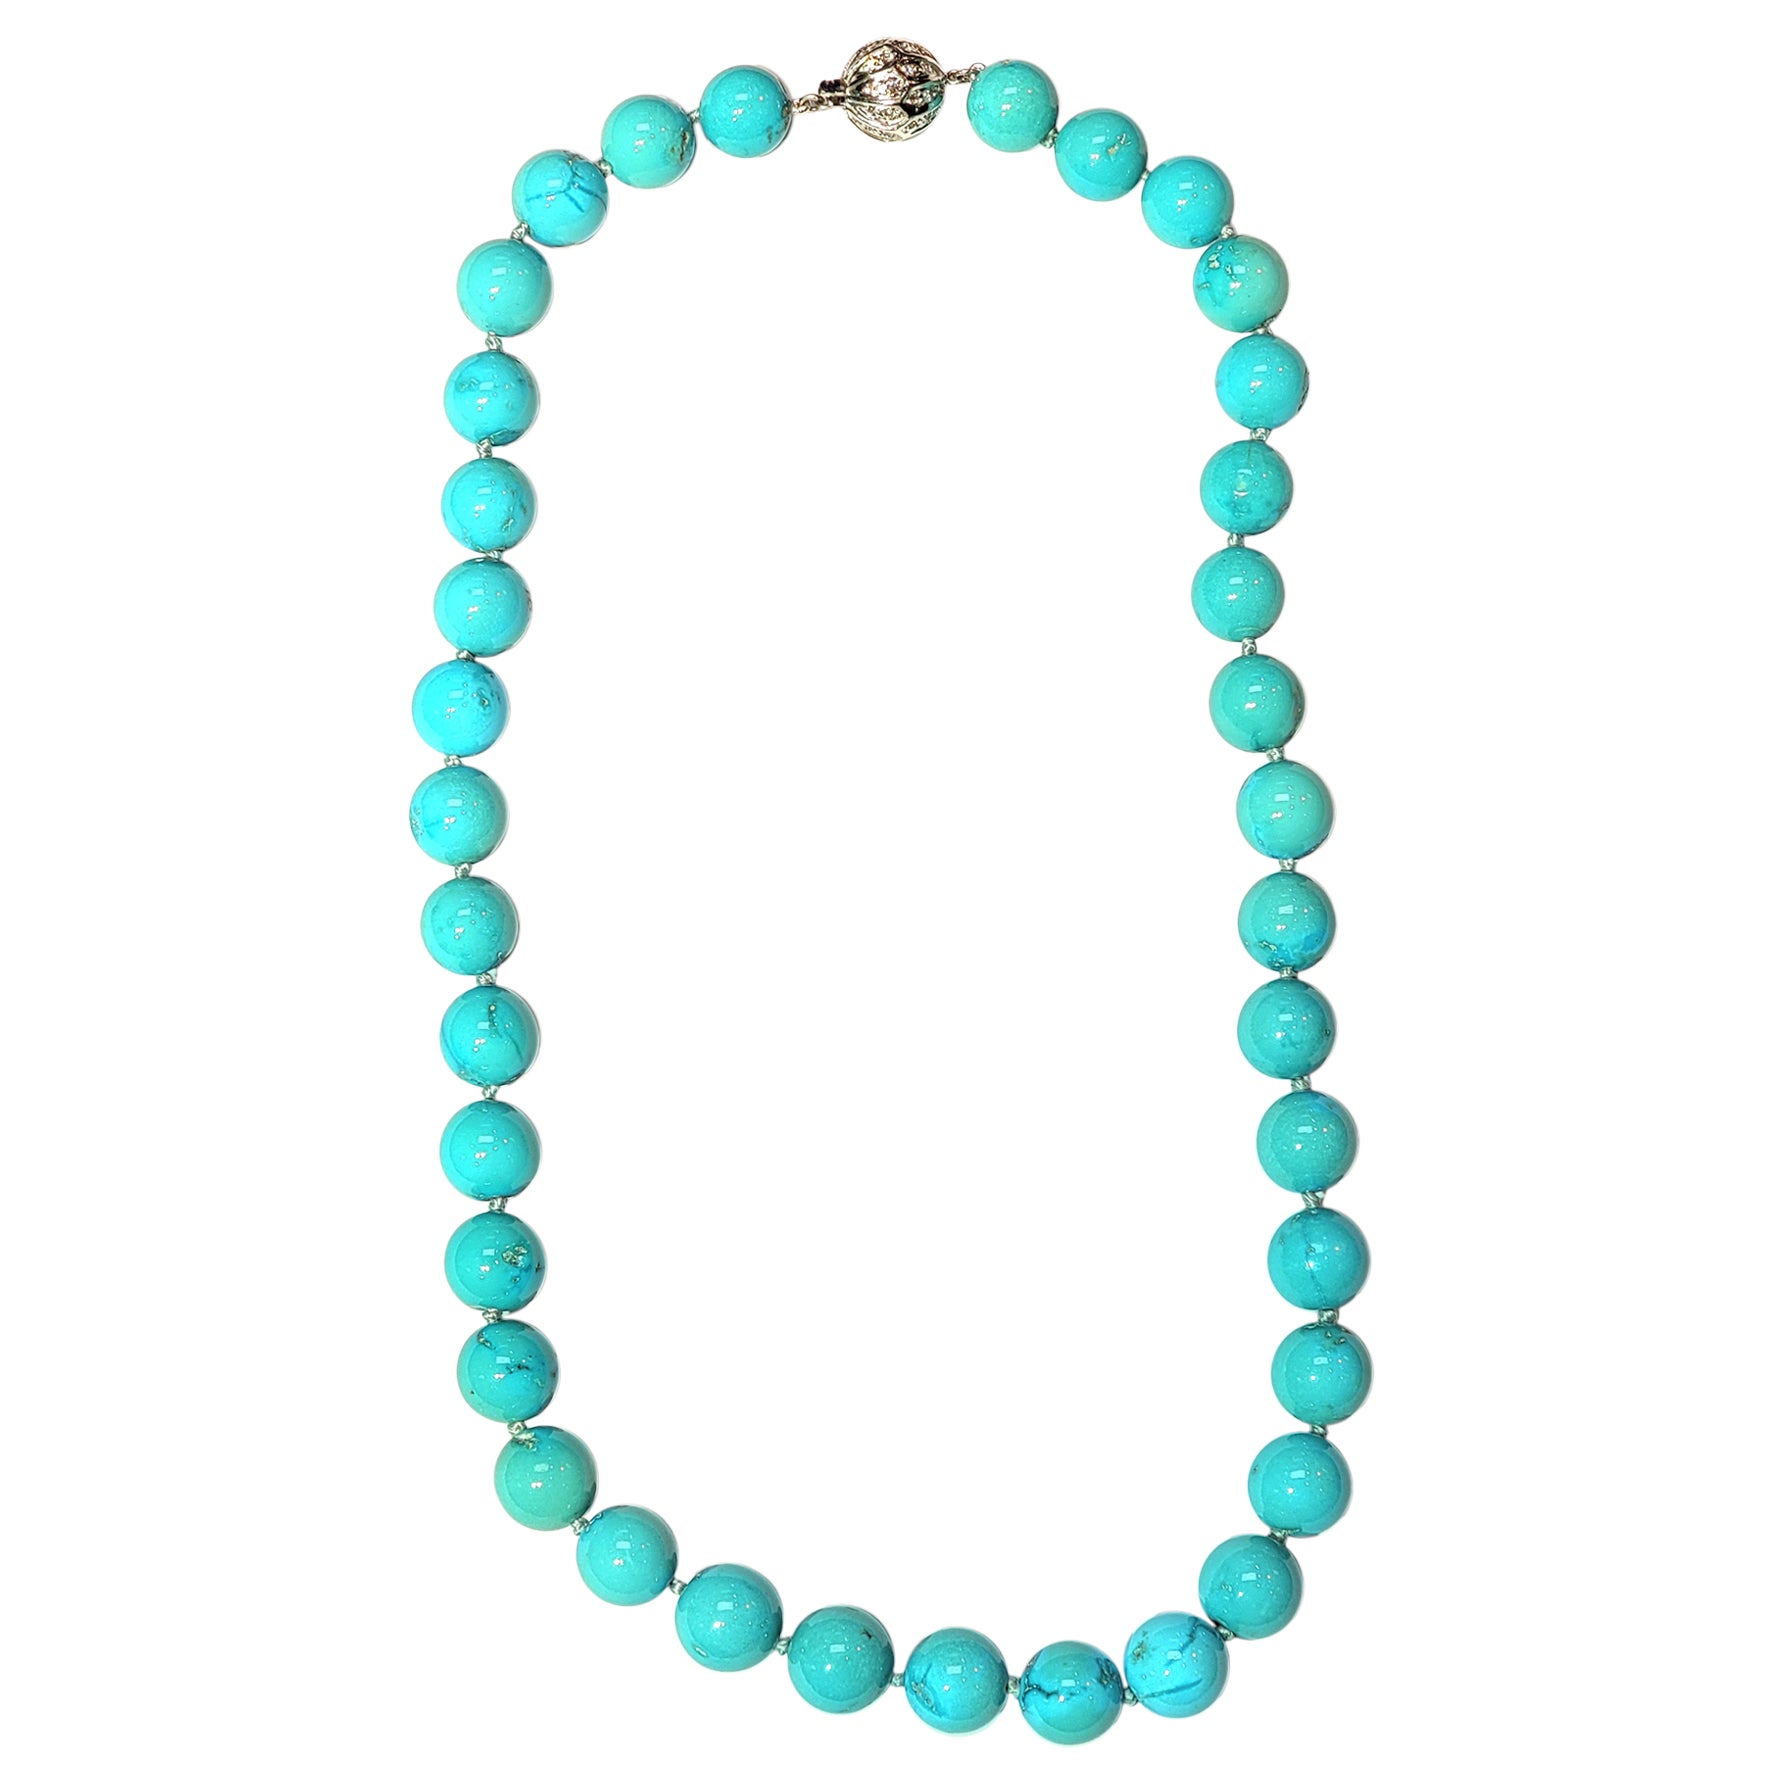 Collier de perles turquoises